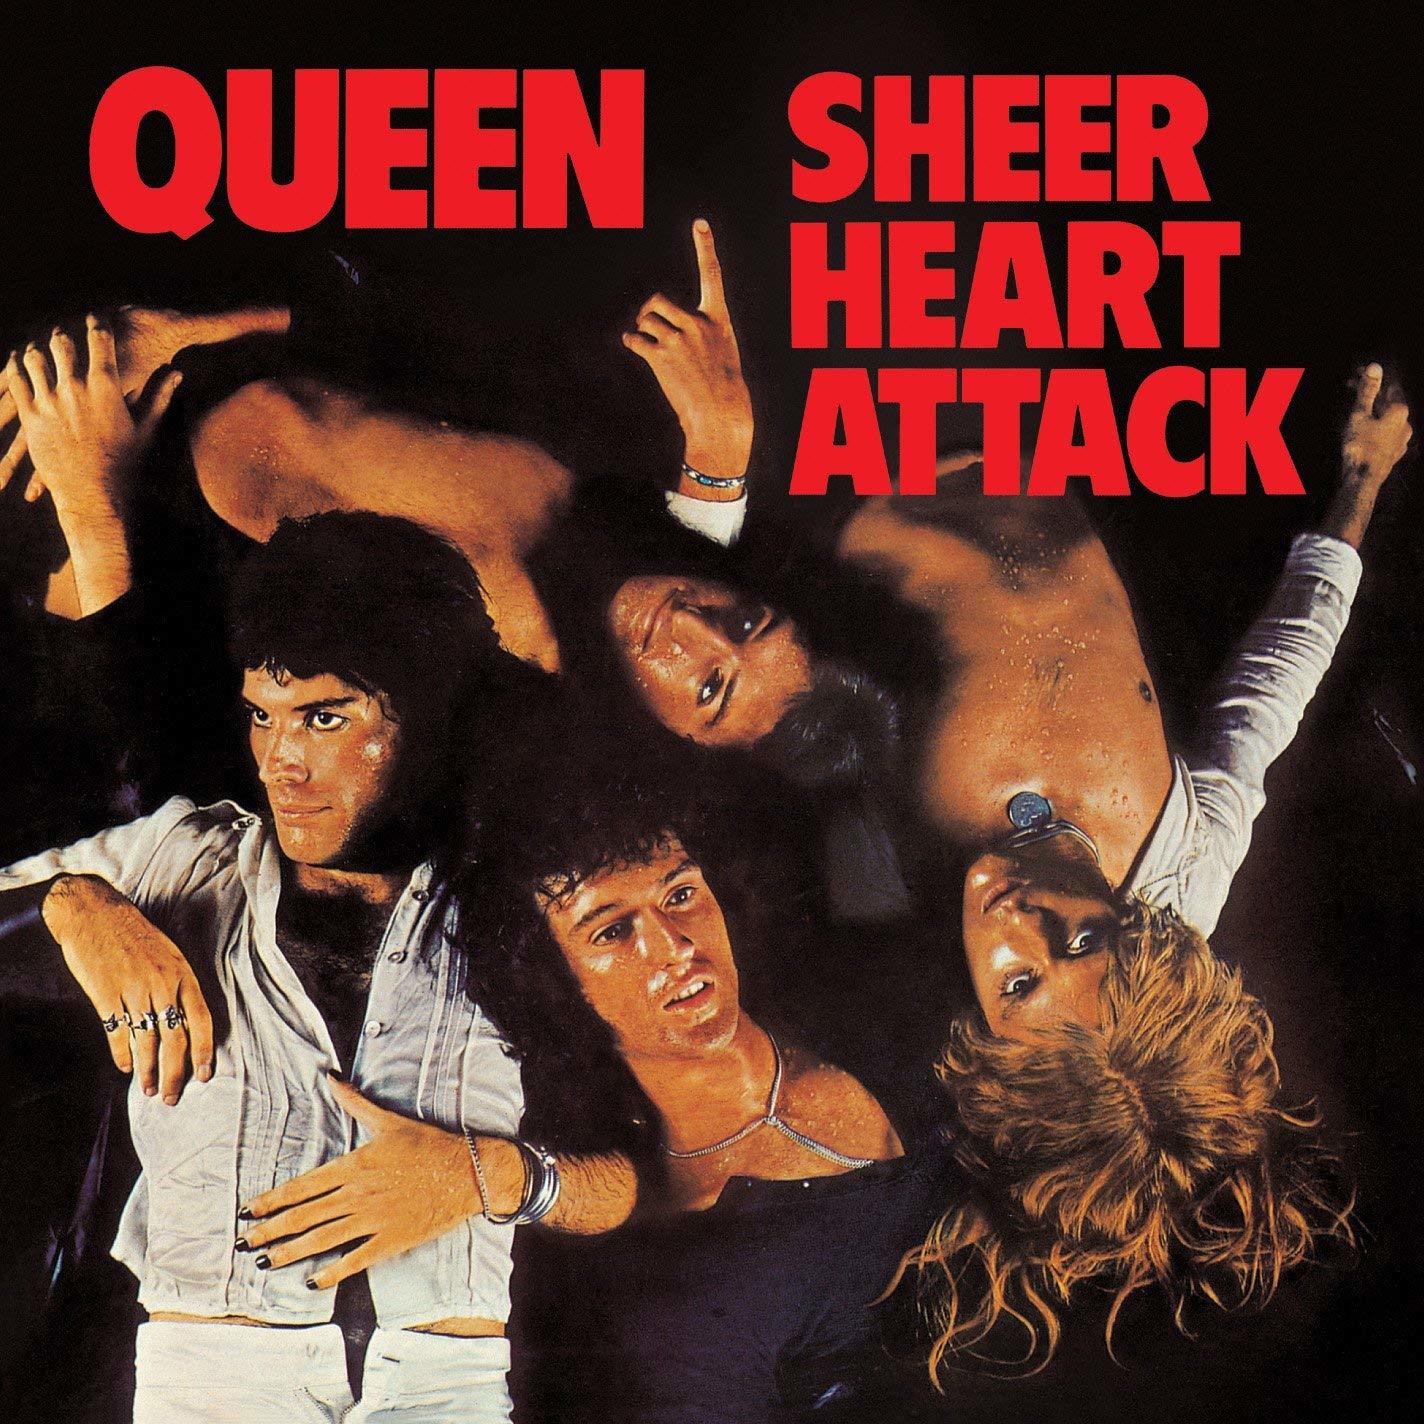 queen sheer heart attack CD (UNIVERSAL)